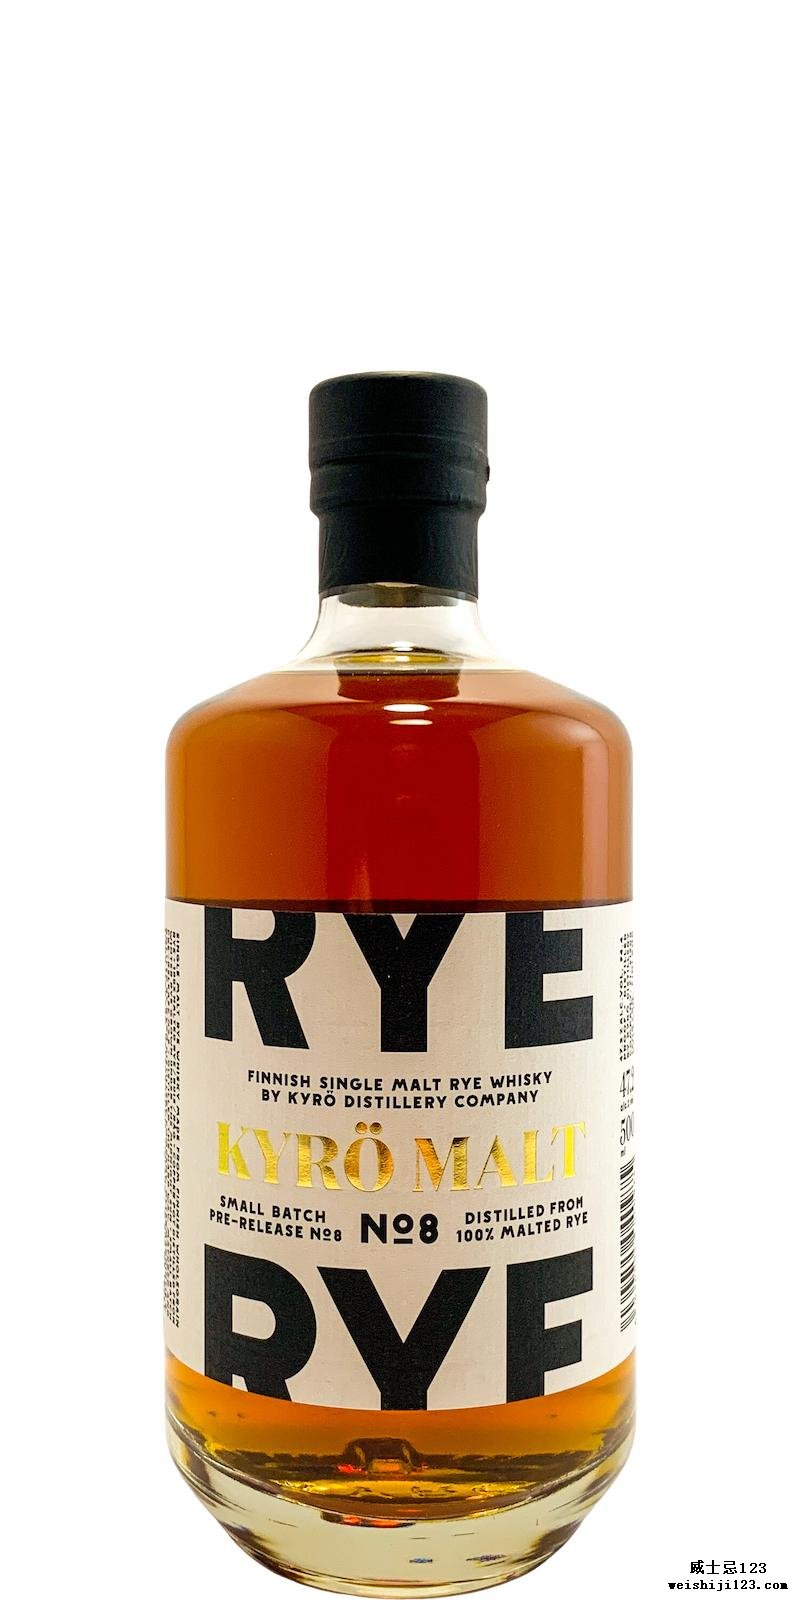 Kyrö Single Malt Rye Whisky